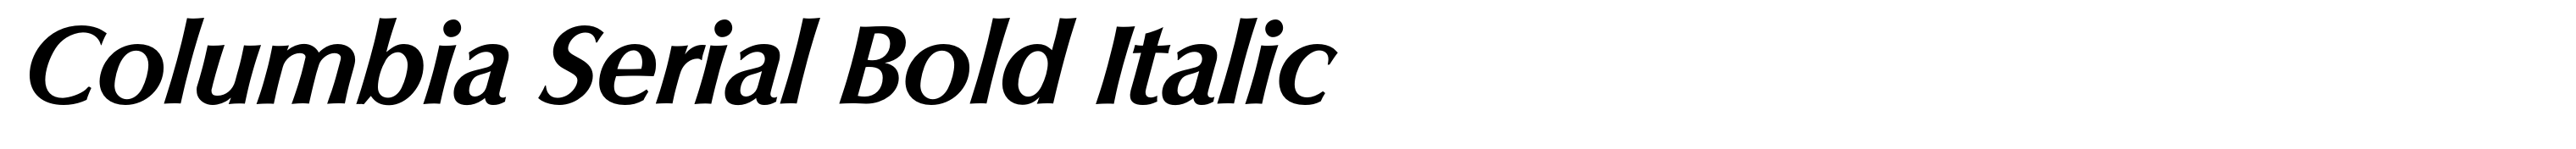 Columbia Serial Bold Italic